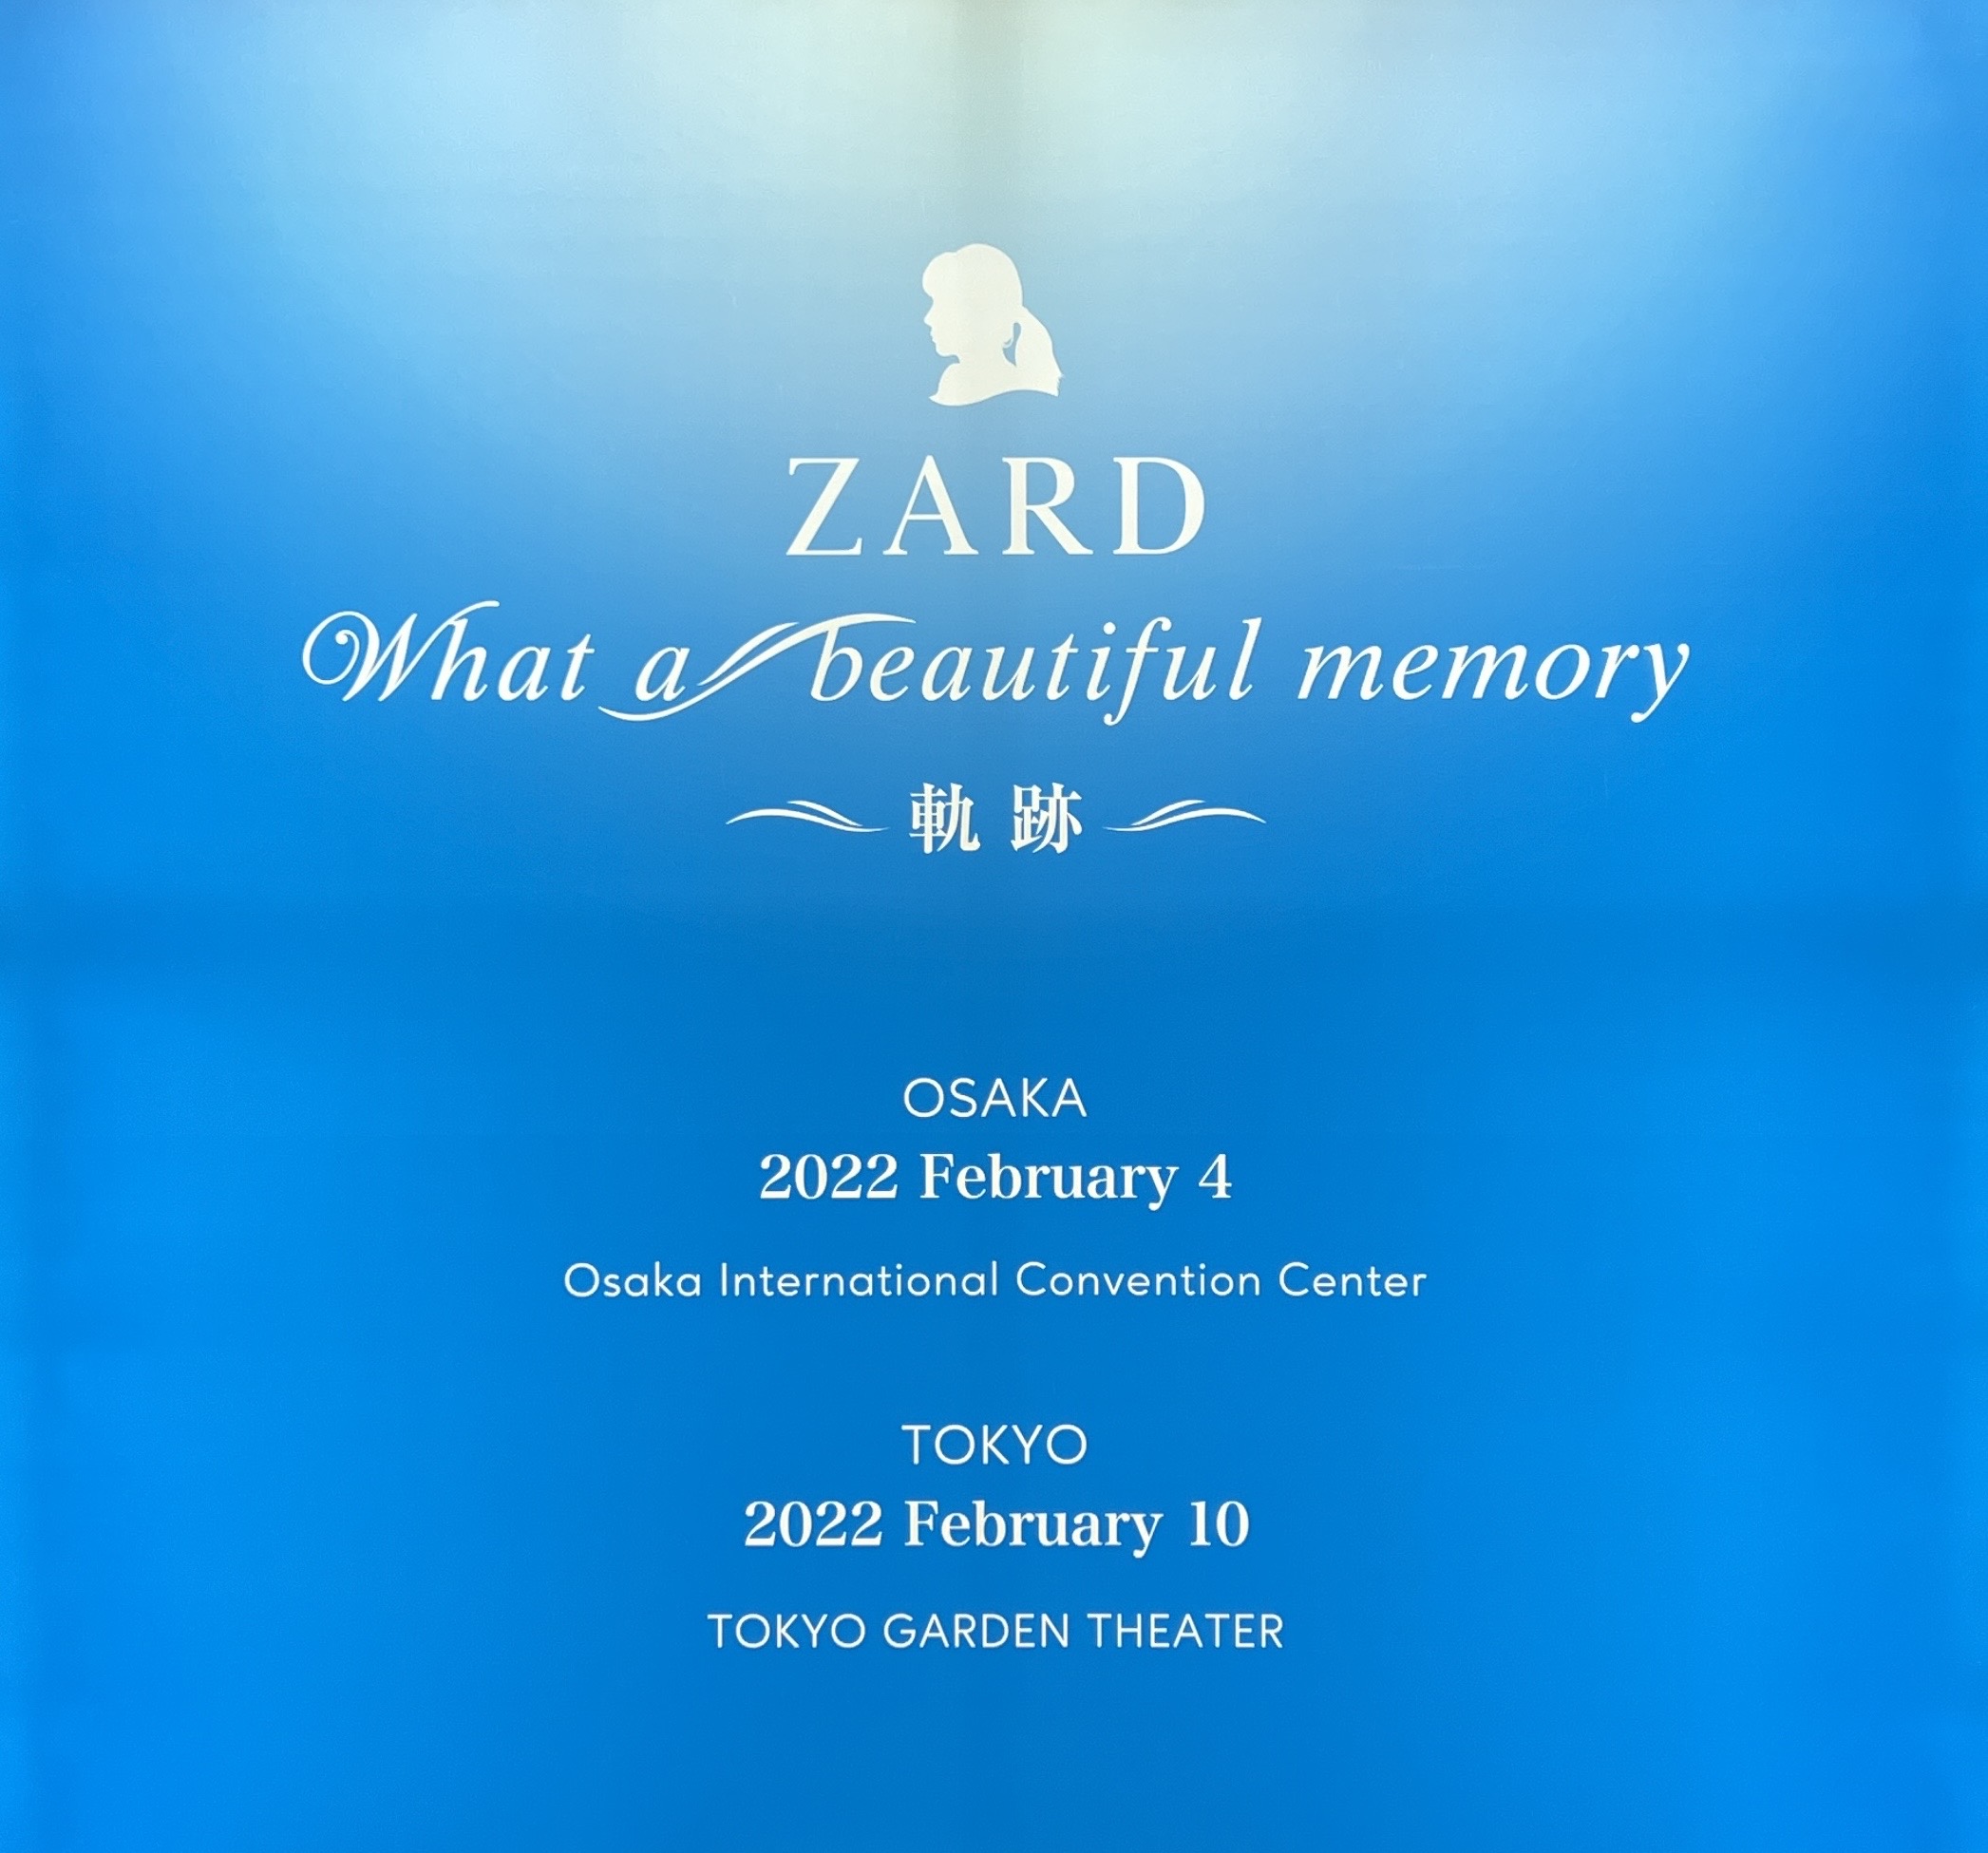 『ZARD “What a beautiful memory ～軌跡～”』のパネルの写真